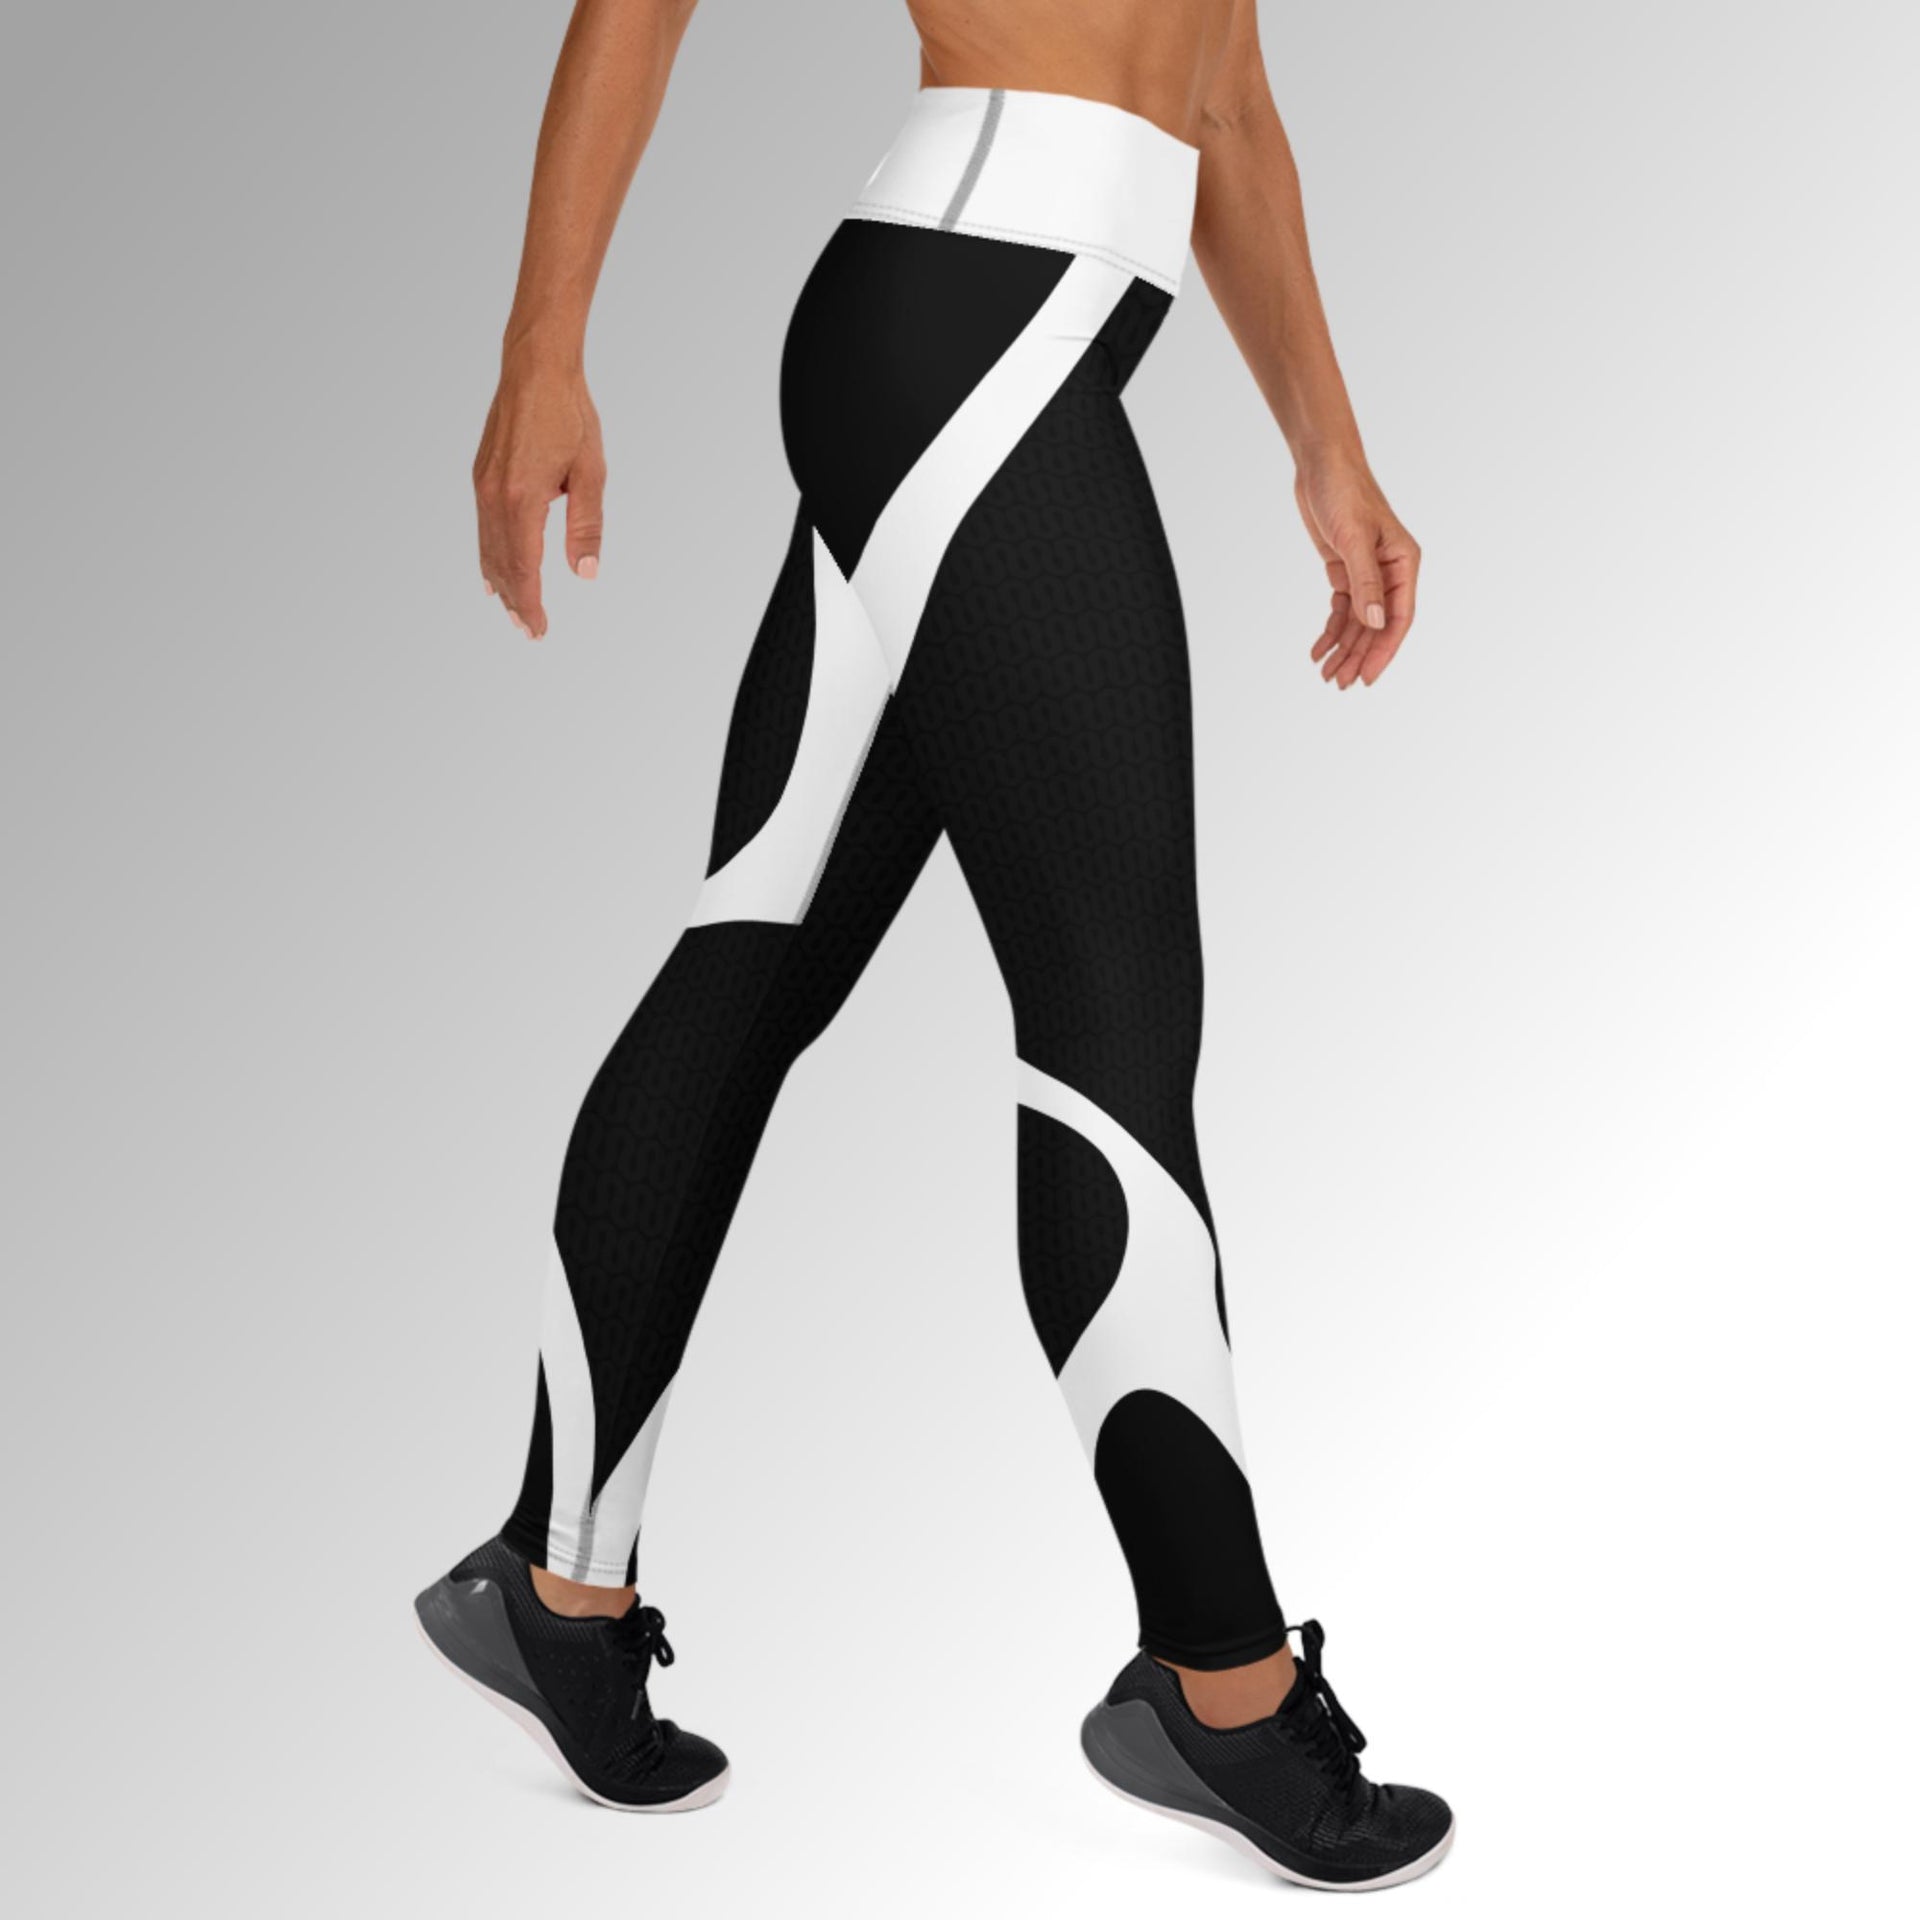 MaxFit Leggings by Jain  High-Performance and Flattering Workout Tights –  Jain Yoga Ltd.